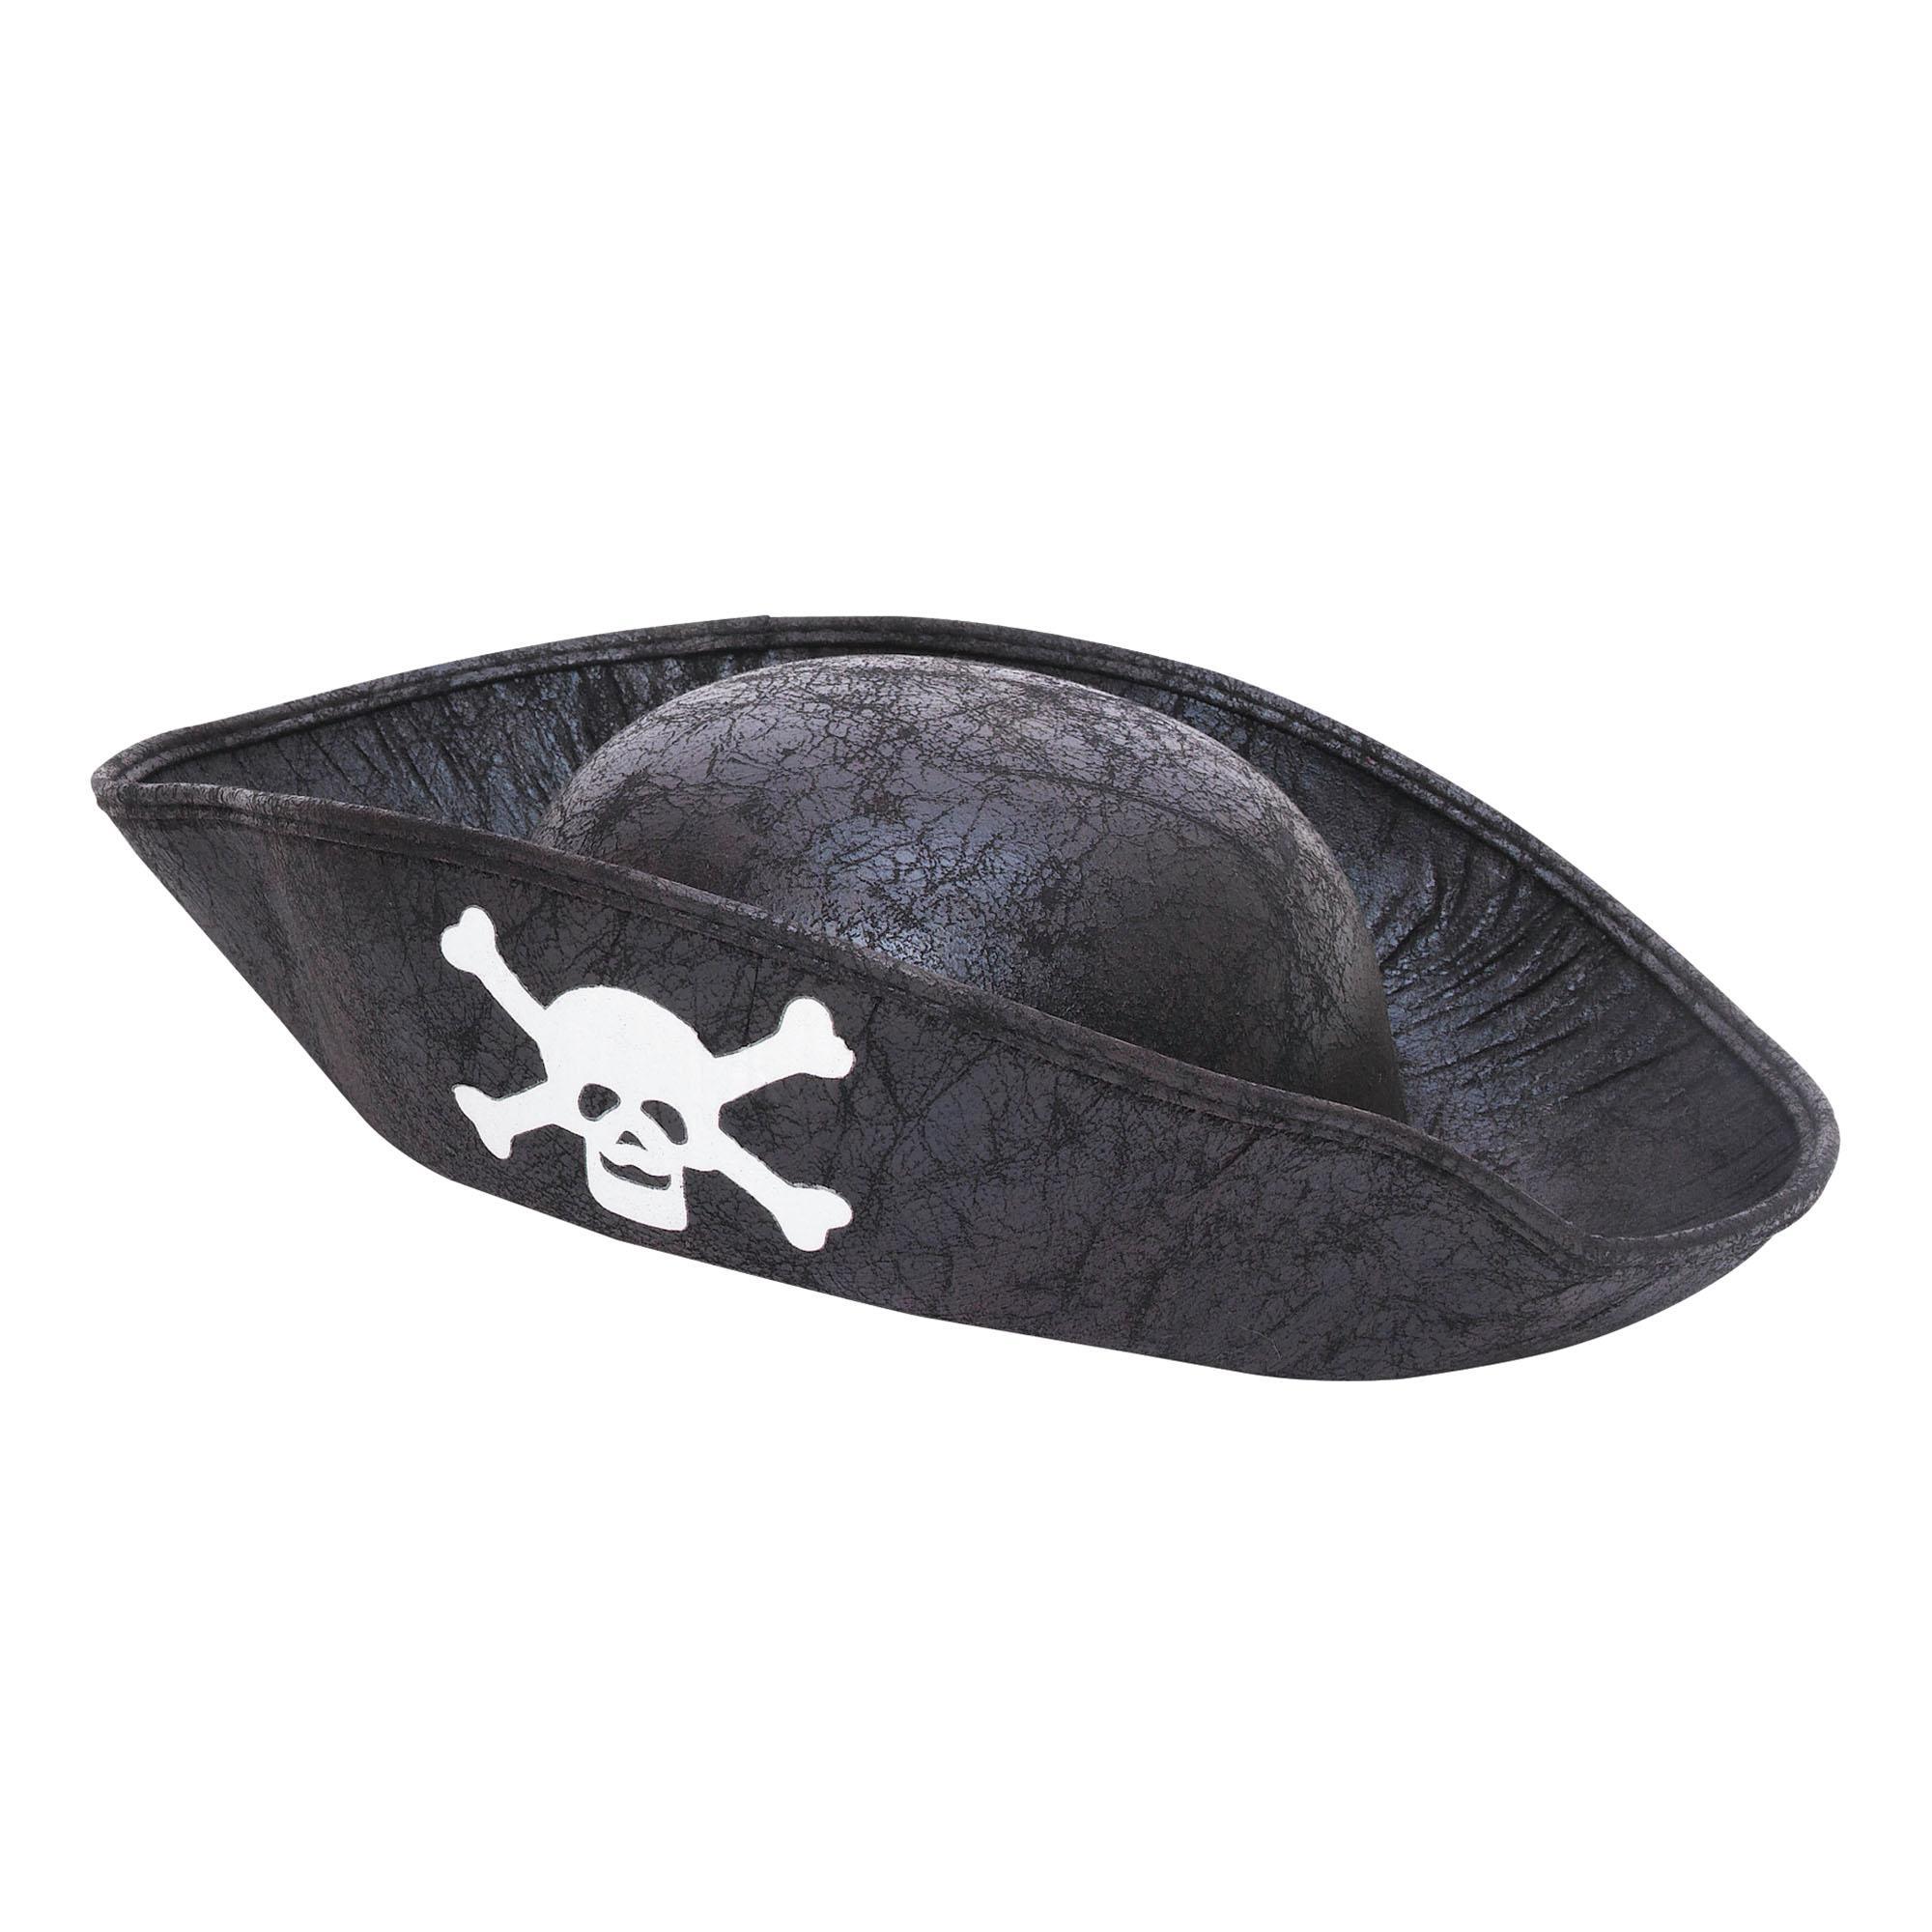 Bristol Novelty Childrens/Kids Skull And Crossbones Pirate Hat (Black/White) (One Size)